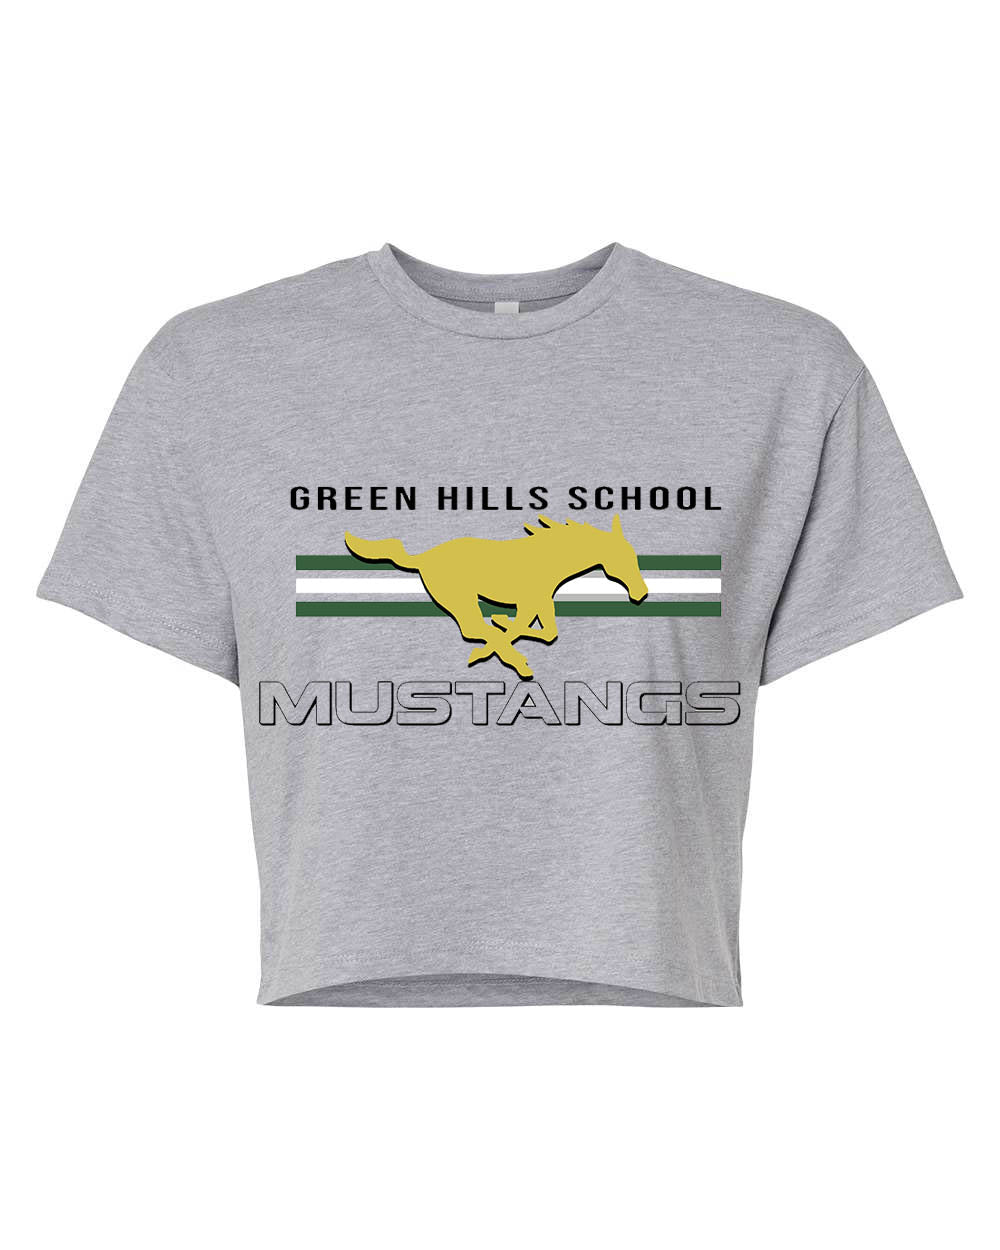 Green Hills design 3 Crop Top